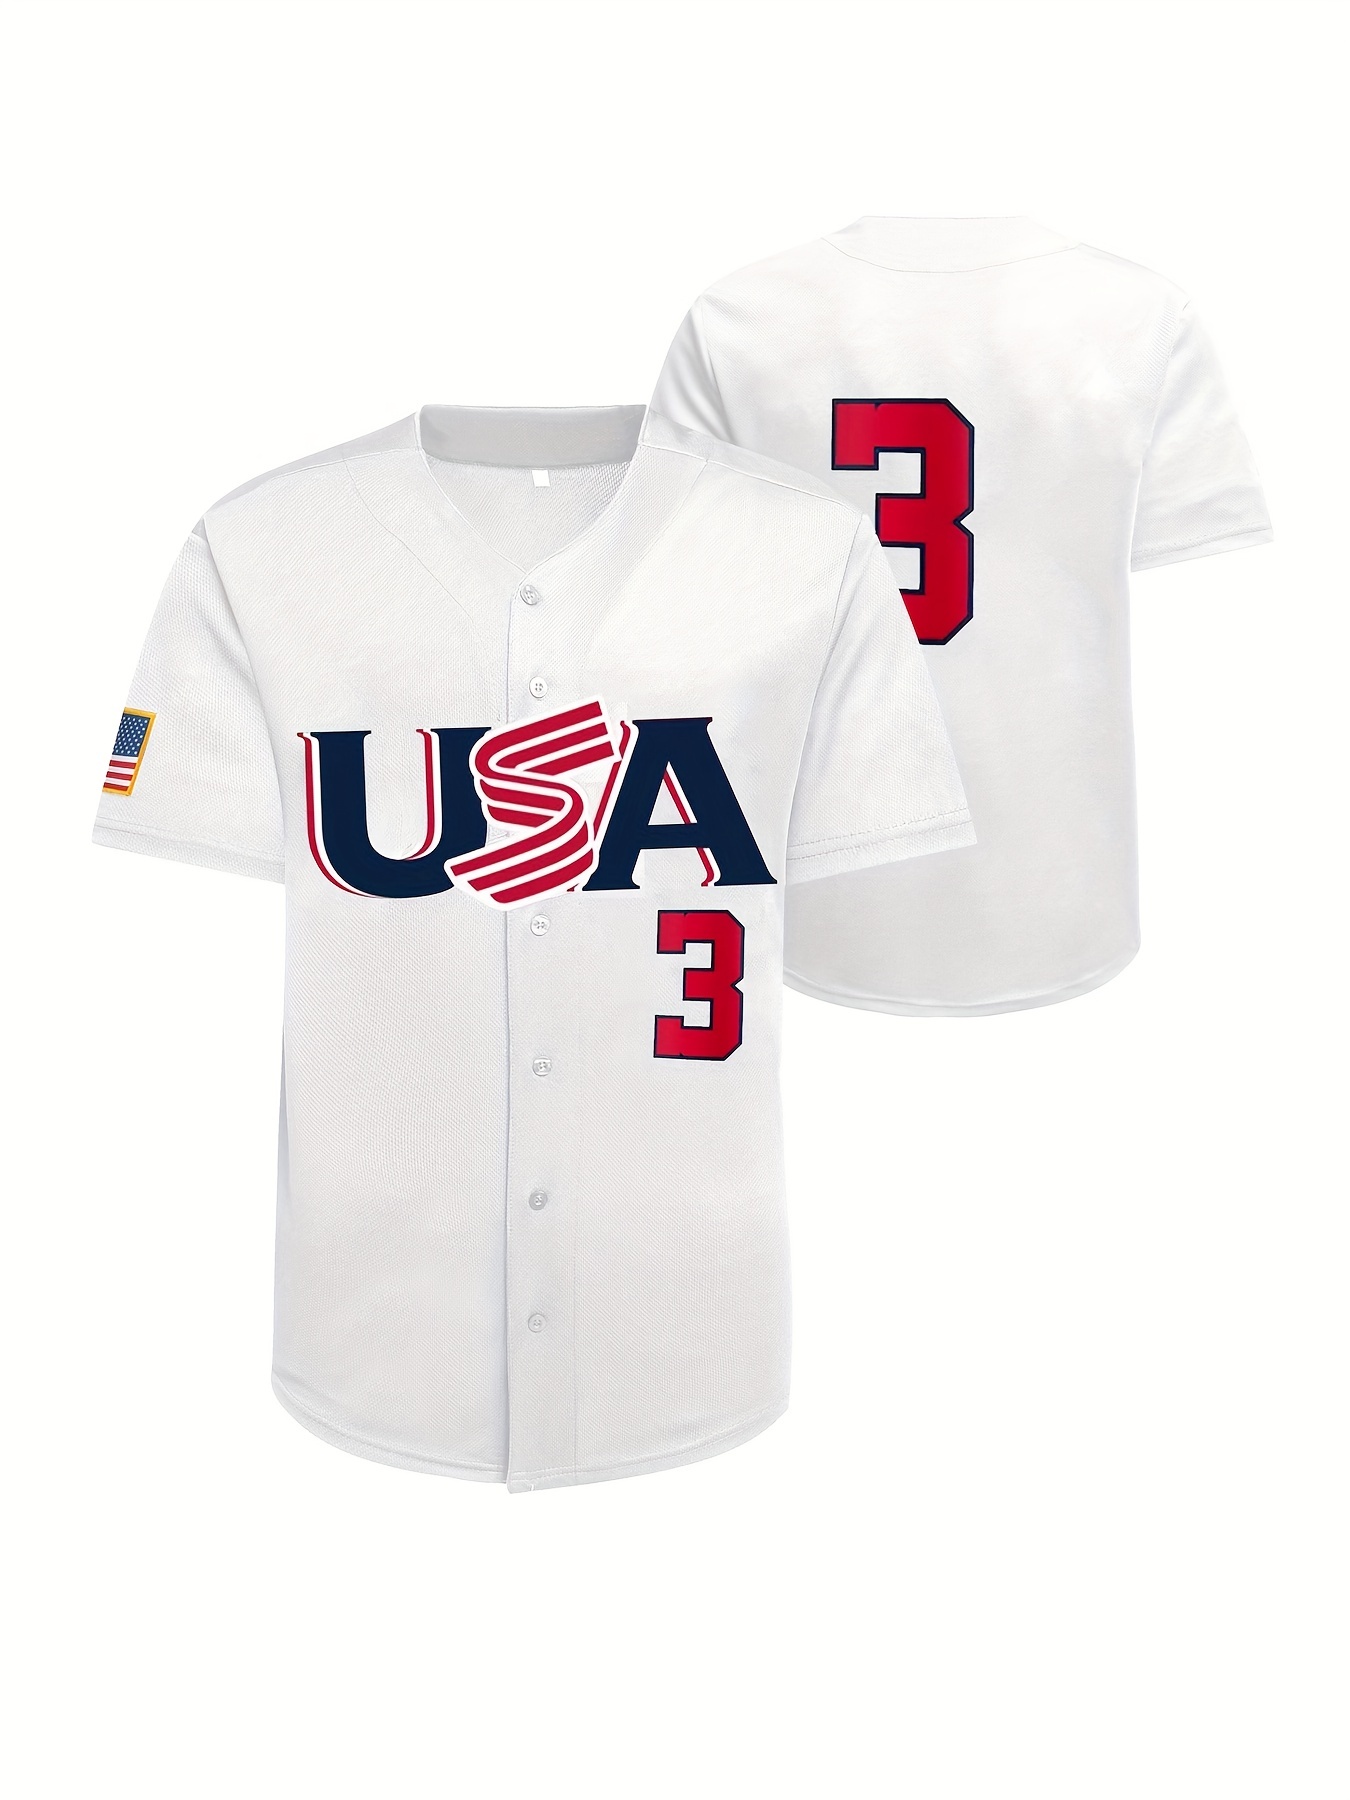 Men's #27 USA Baseball Jersey, Active Button Up Short Sleeve Uniform Baseball Shirt for Training Competition Size S-XXXL,Temu